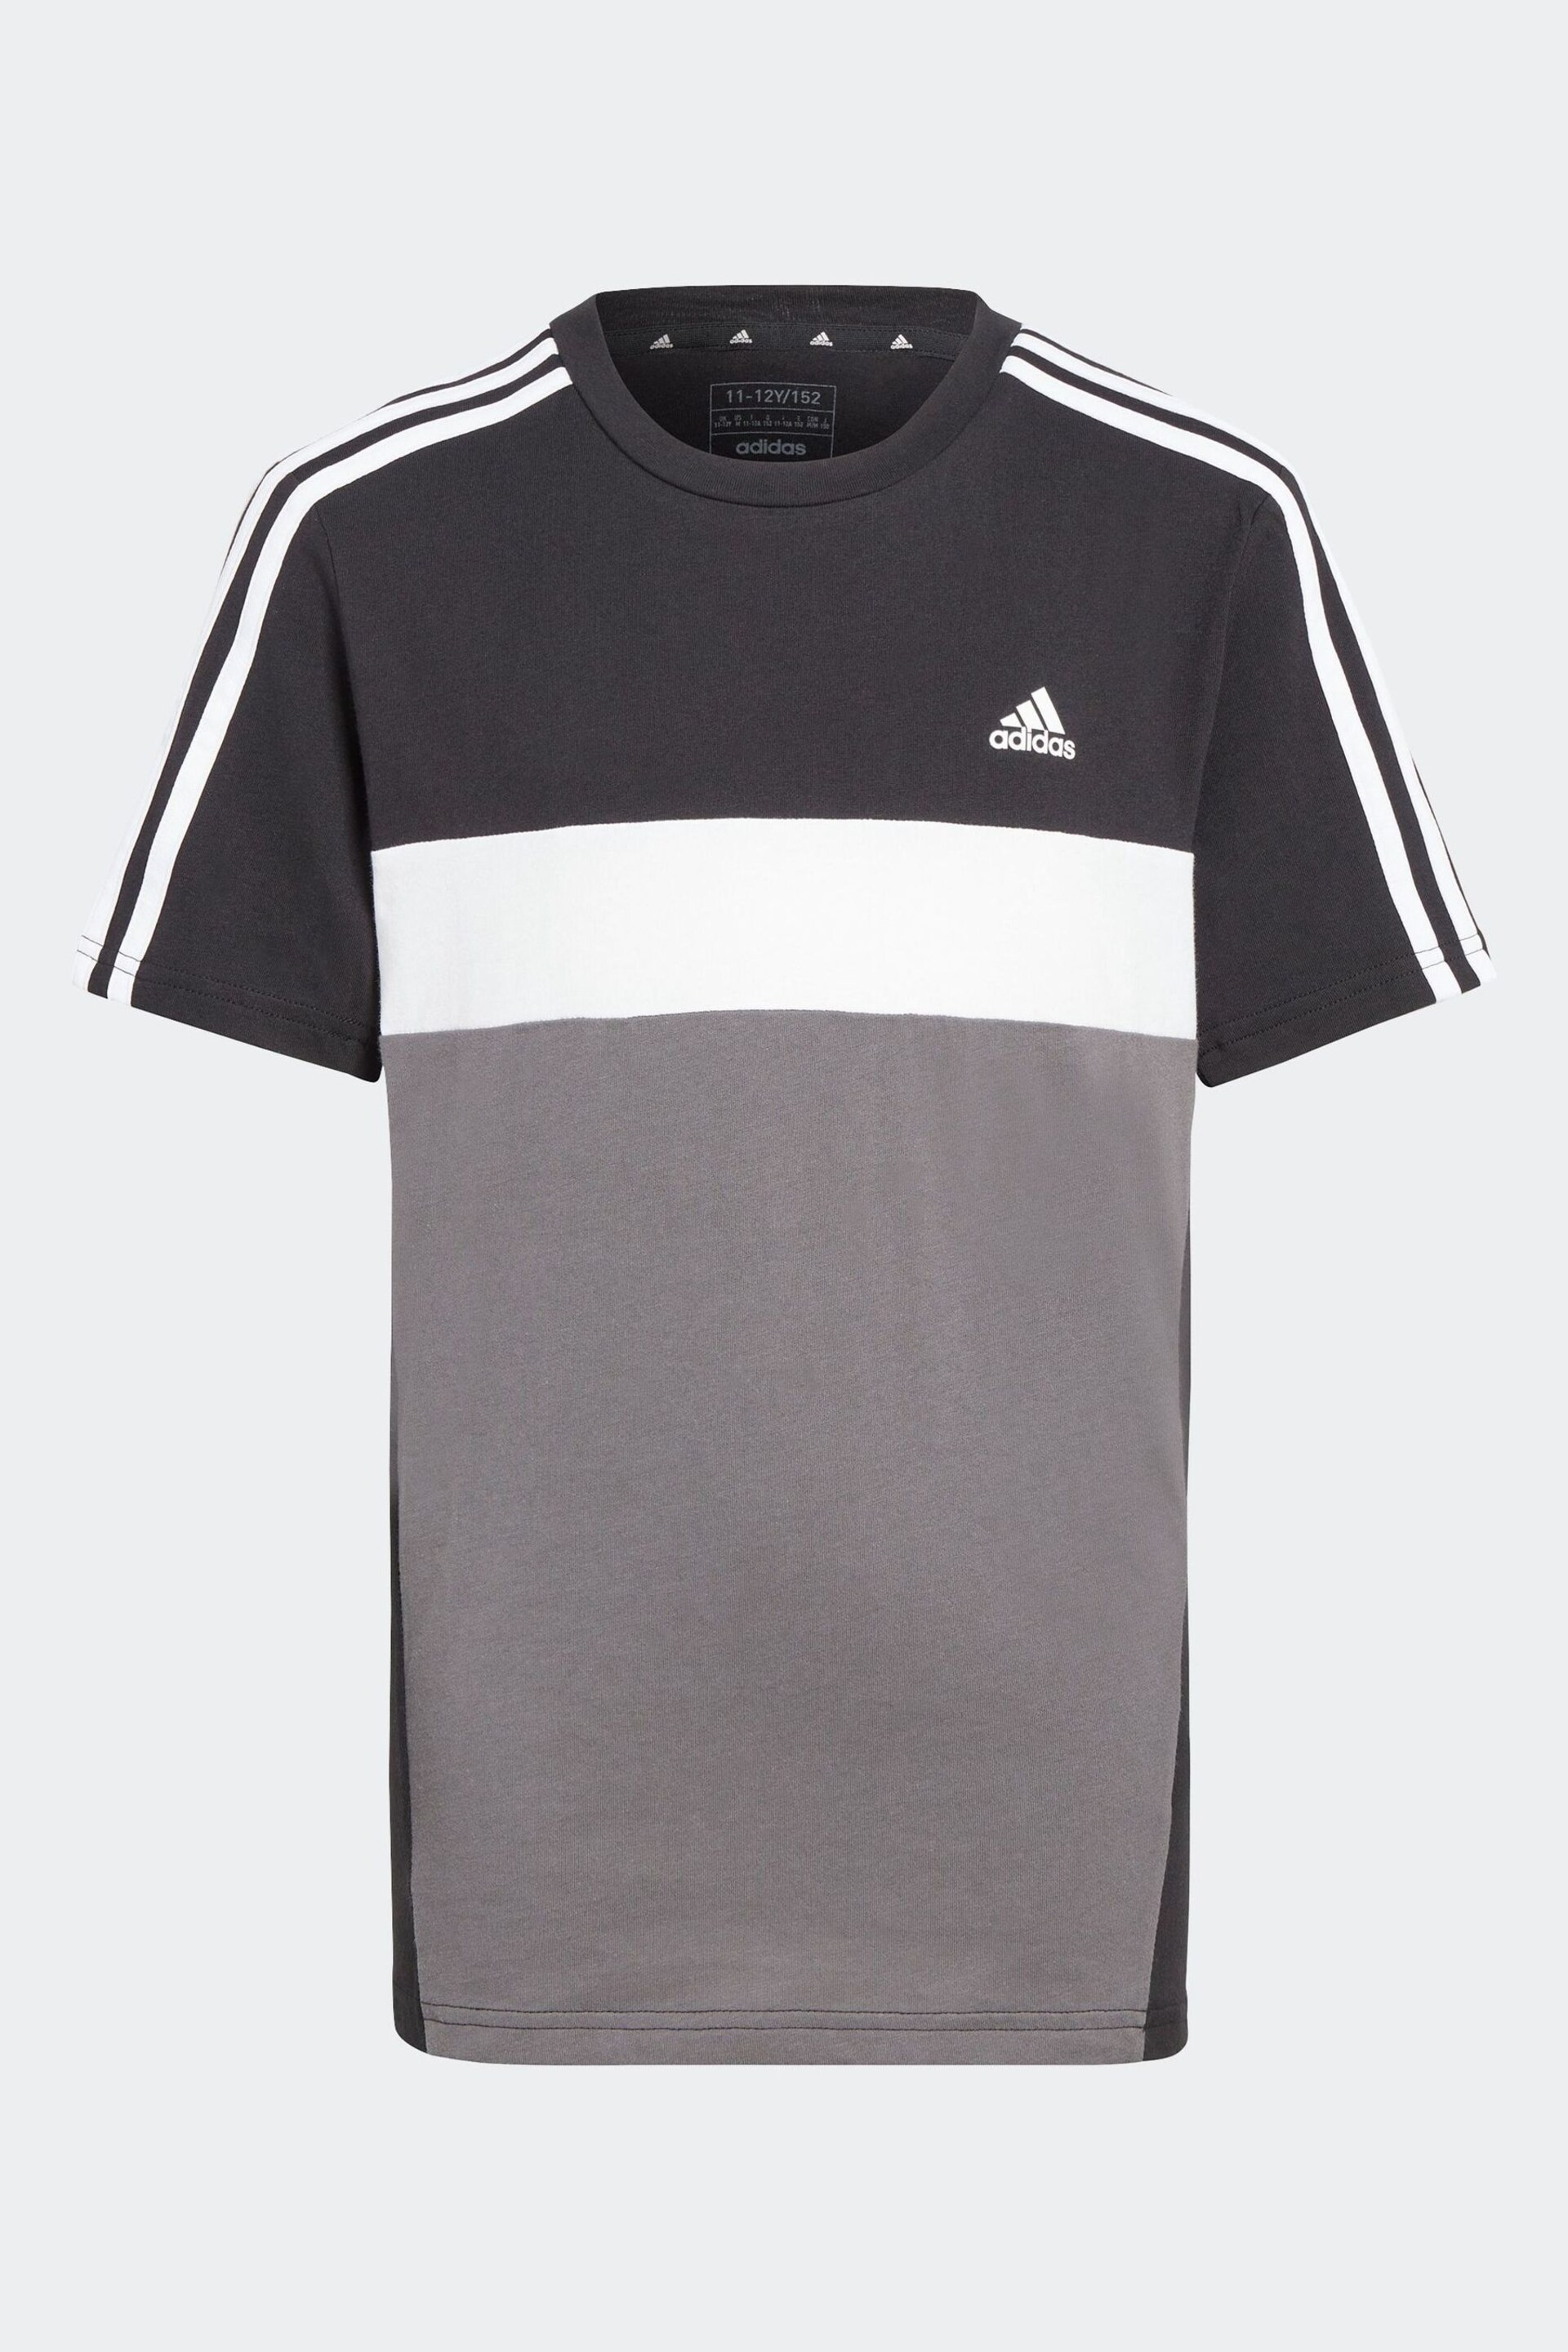 adidas Black Kids Sportswear Tiberio 3-Stripes Colourblock Cotton T-Shirt - Image 4 of 8